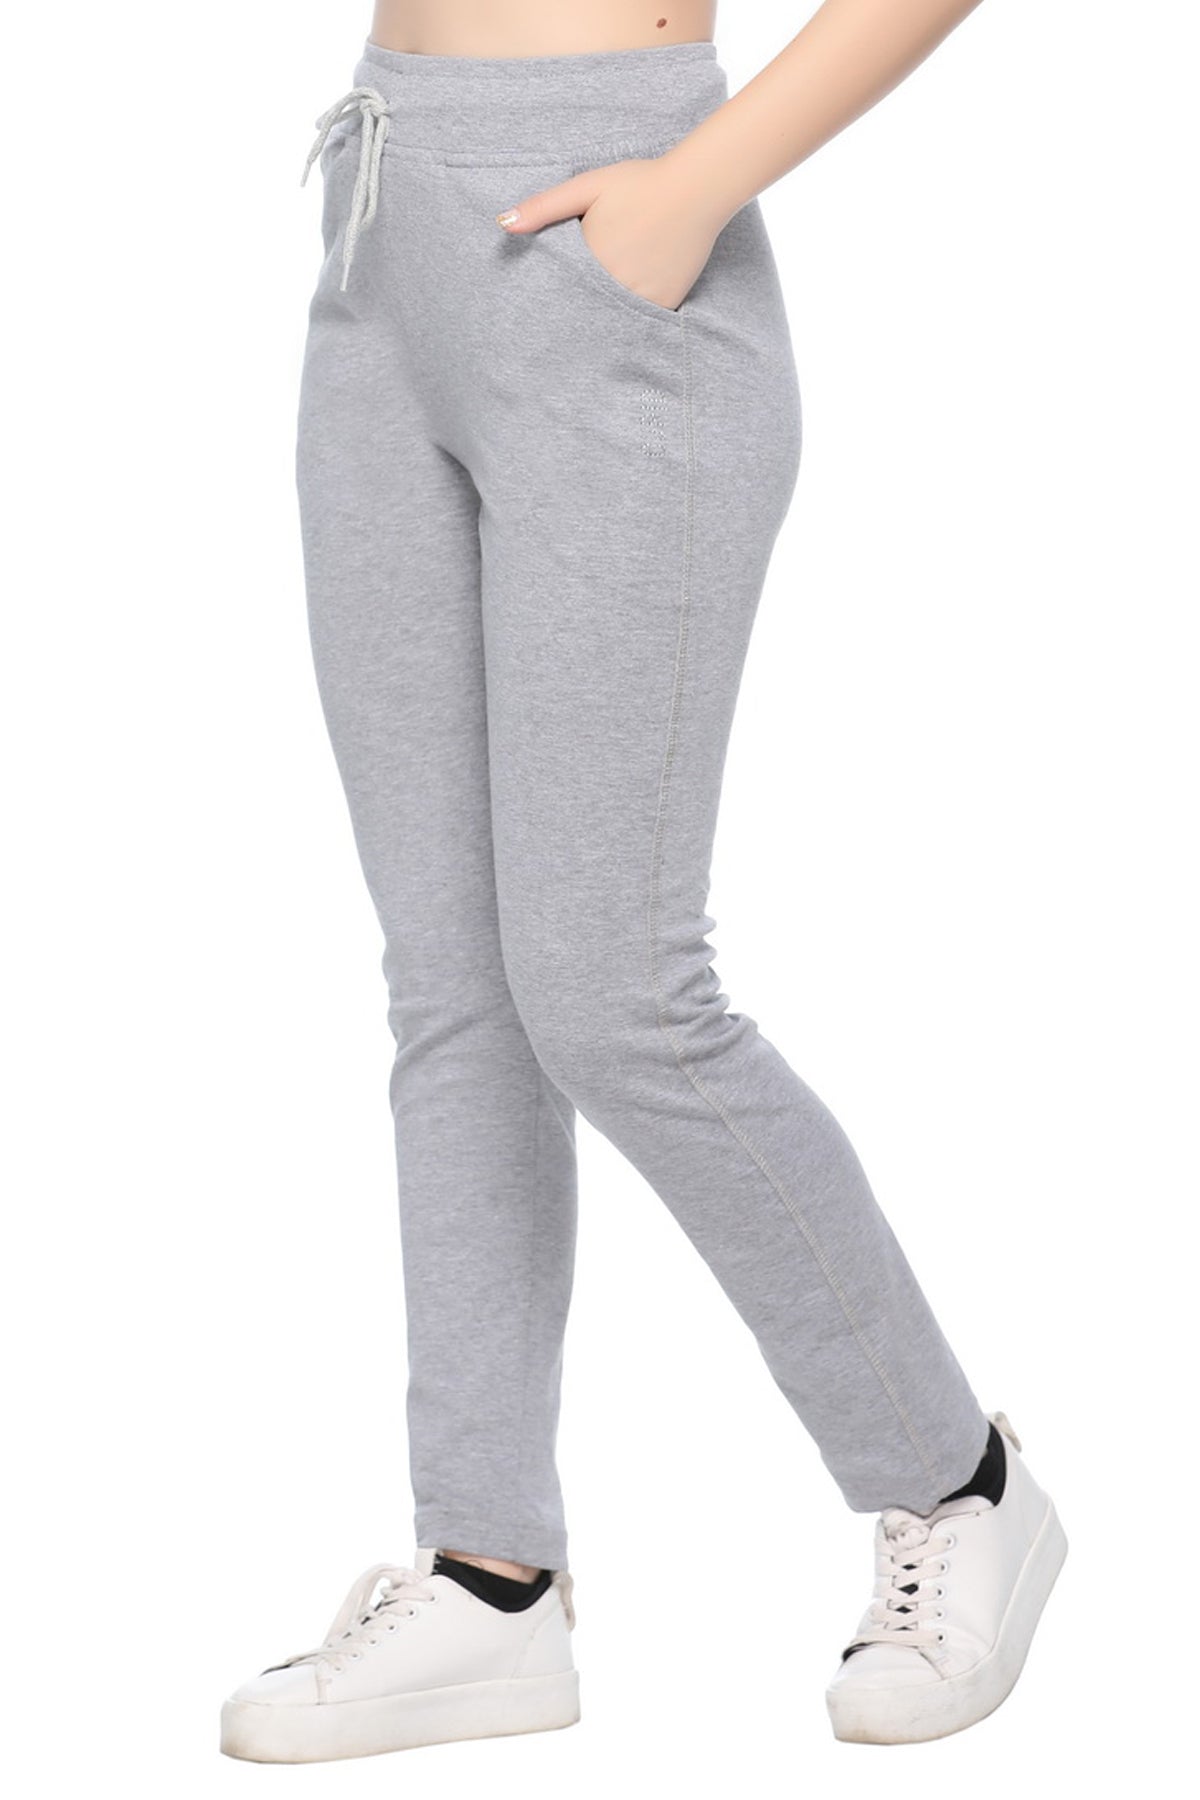 Bottums | Premium- Leggings, Cargo, Jeans and More | Pants For Women